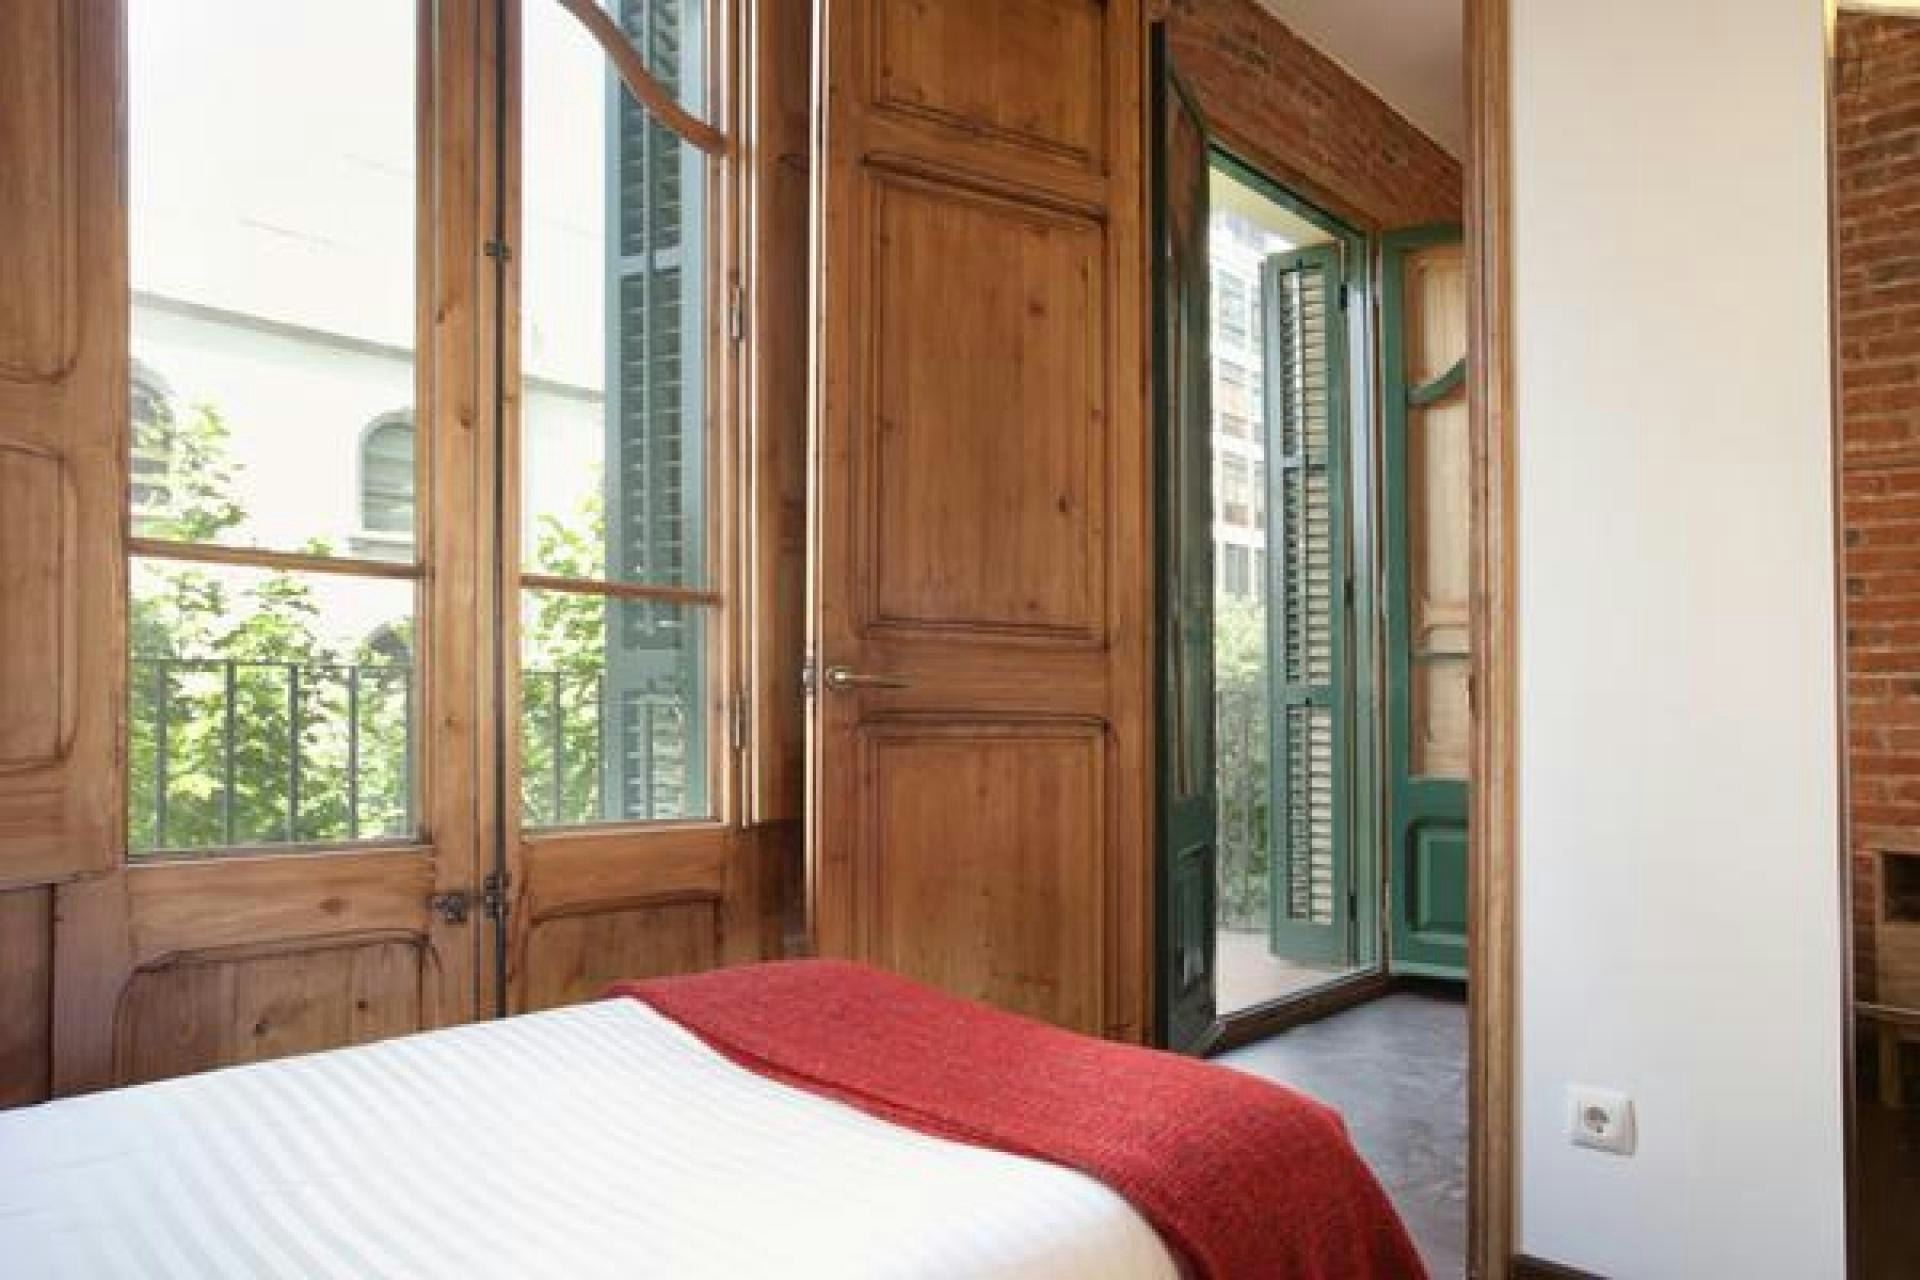 Pleasant 2-bedroom apartment with view on La Sagrada Familia